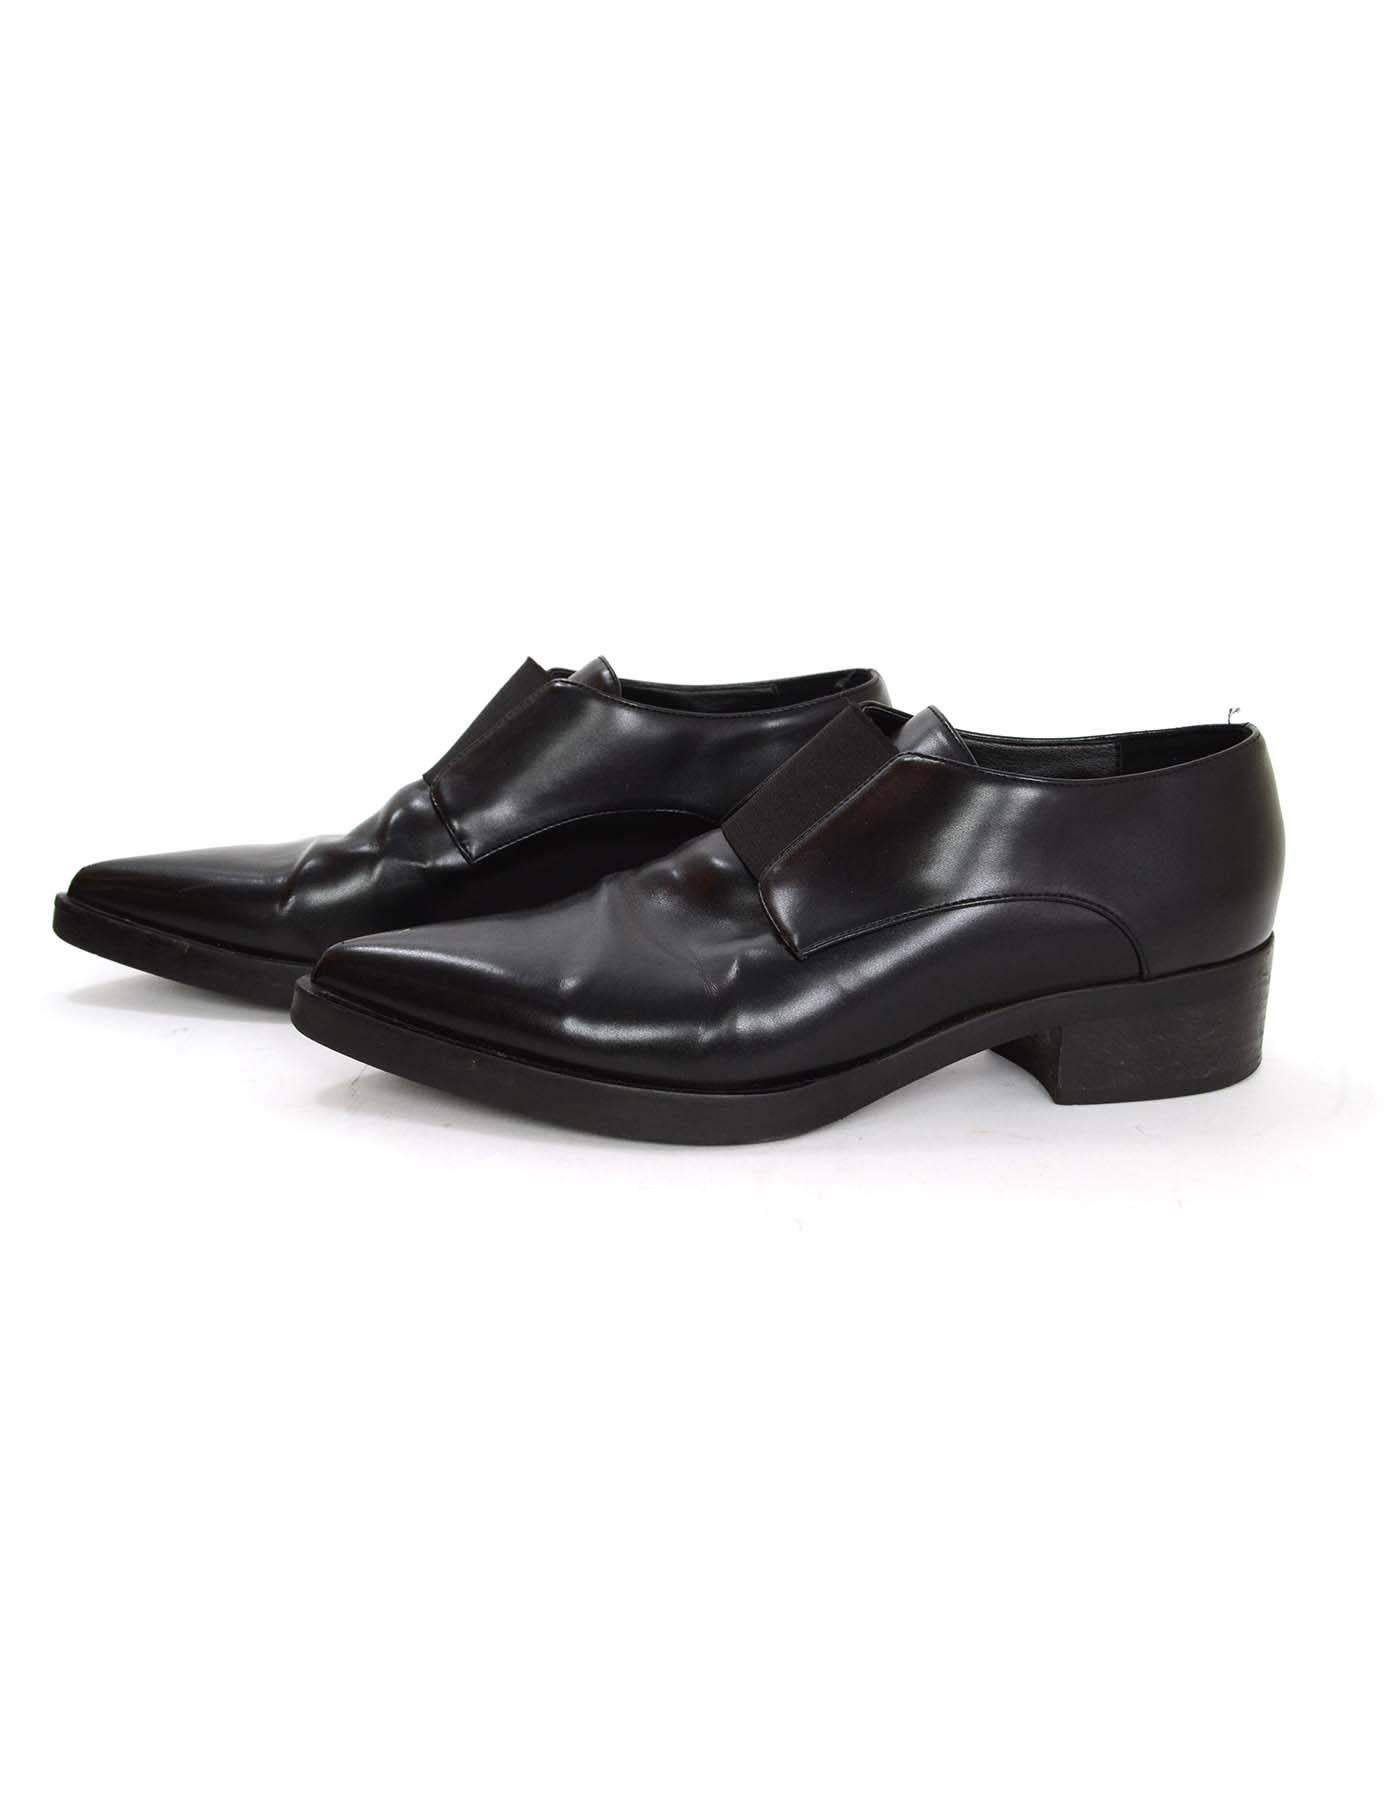 Women's Stella McCartney Black Pointed Toe Tuxedo Shoes sz 37